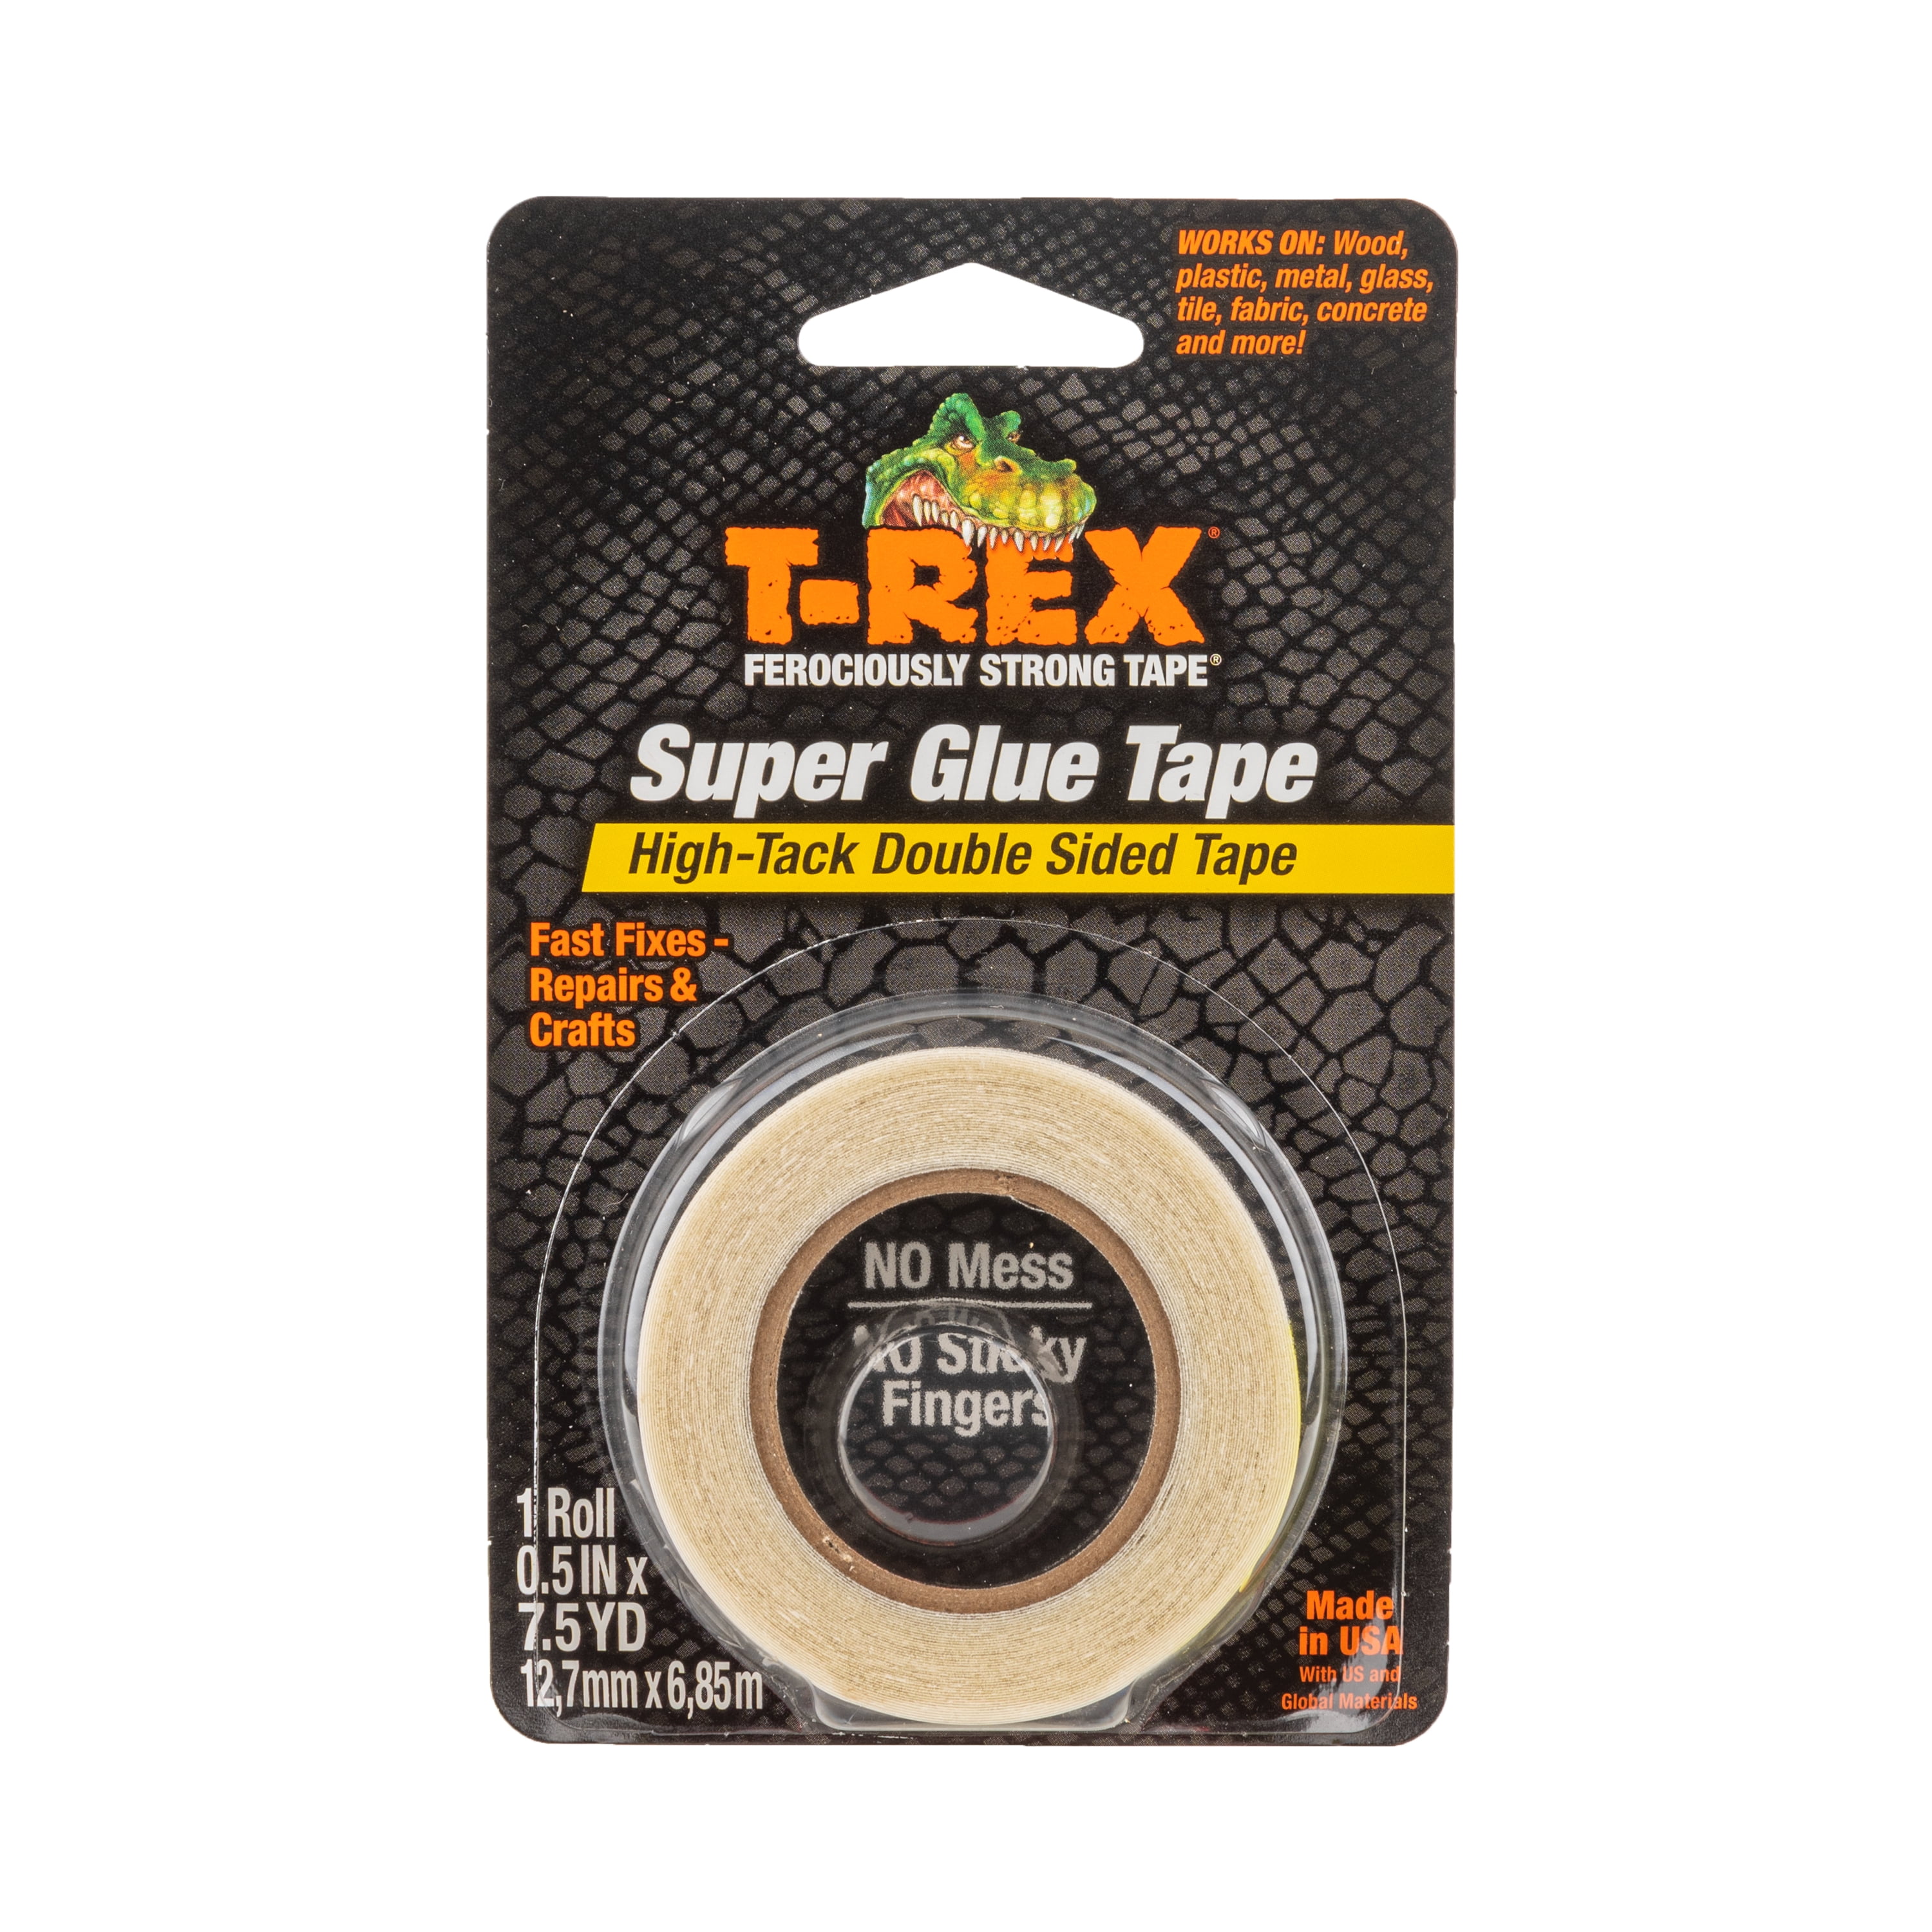 Glue Tape - TG-900